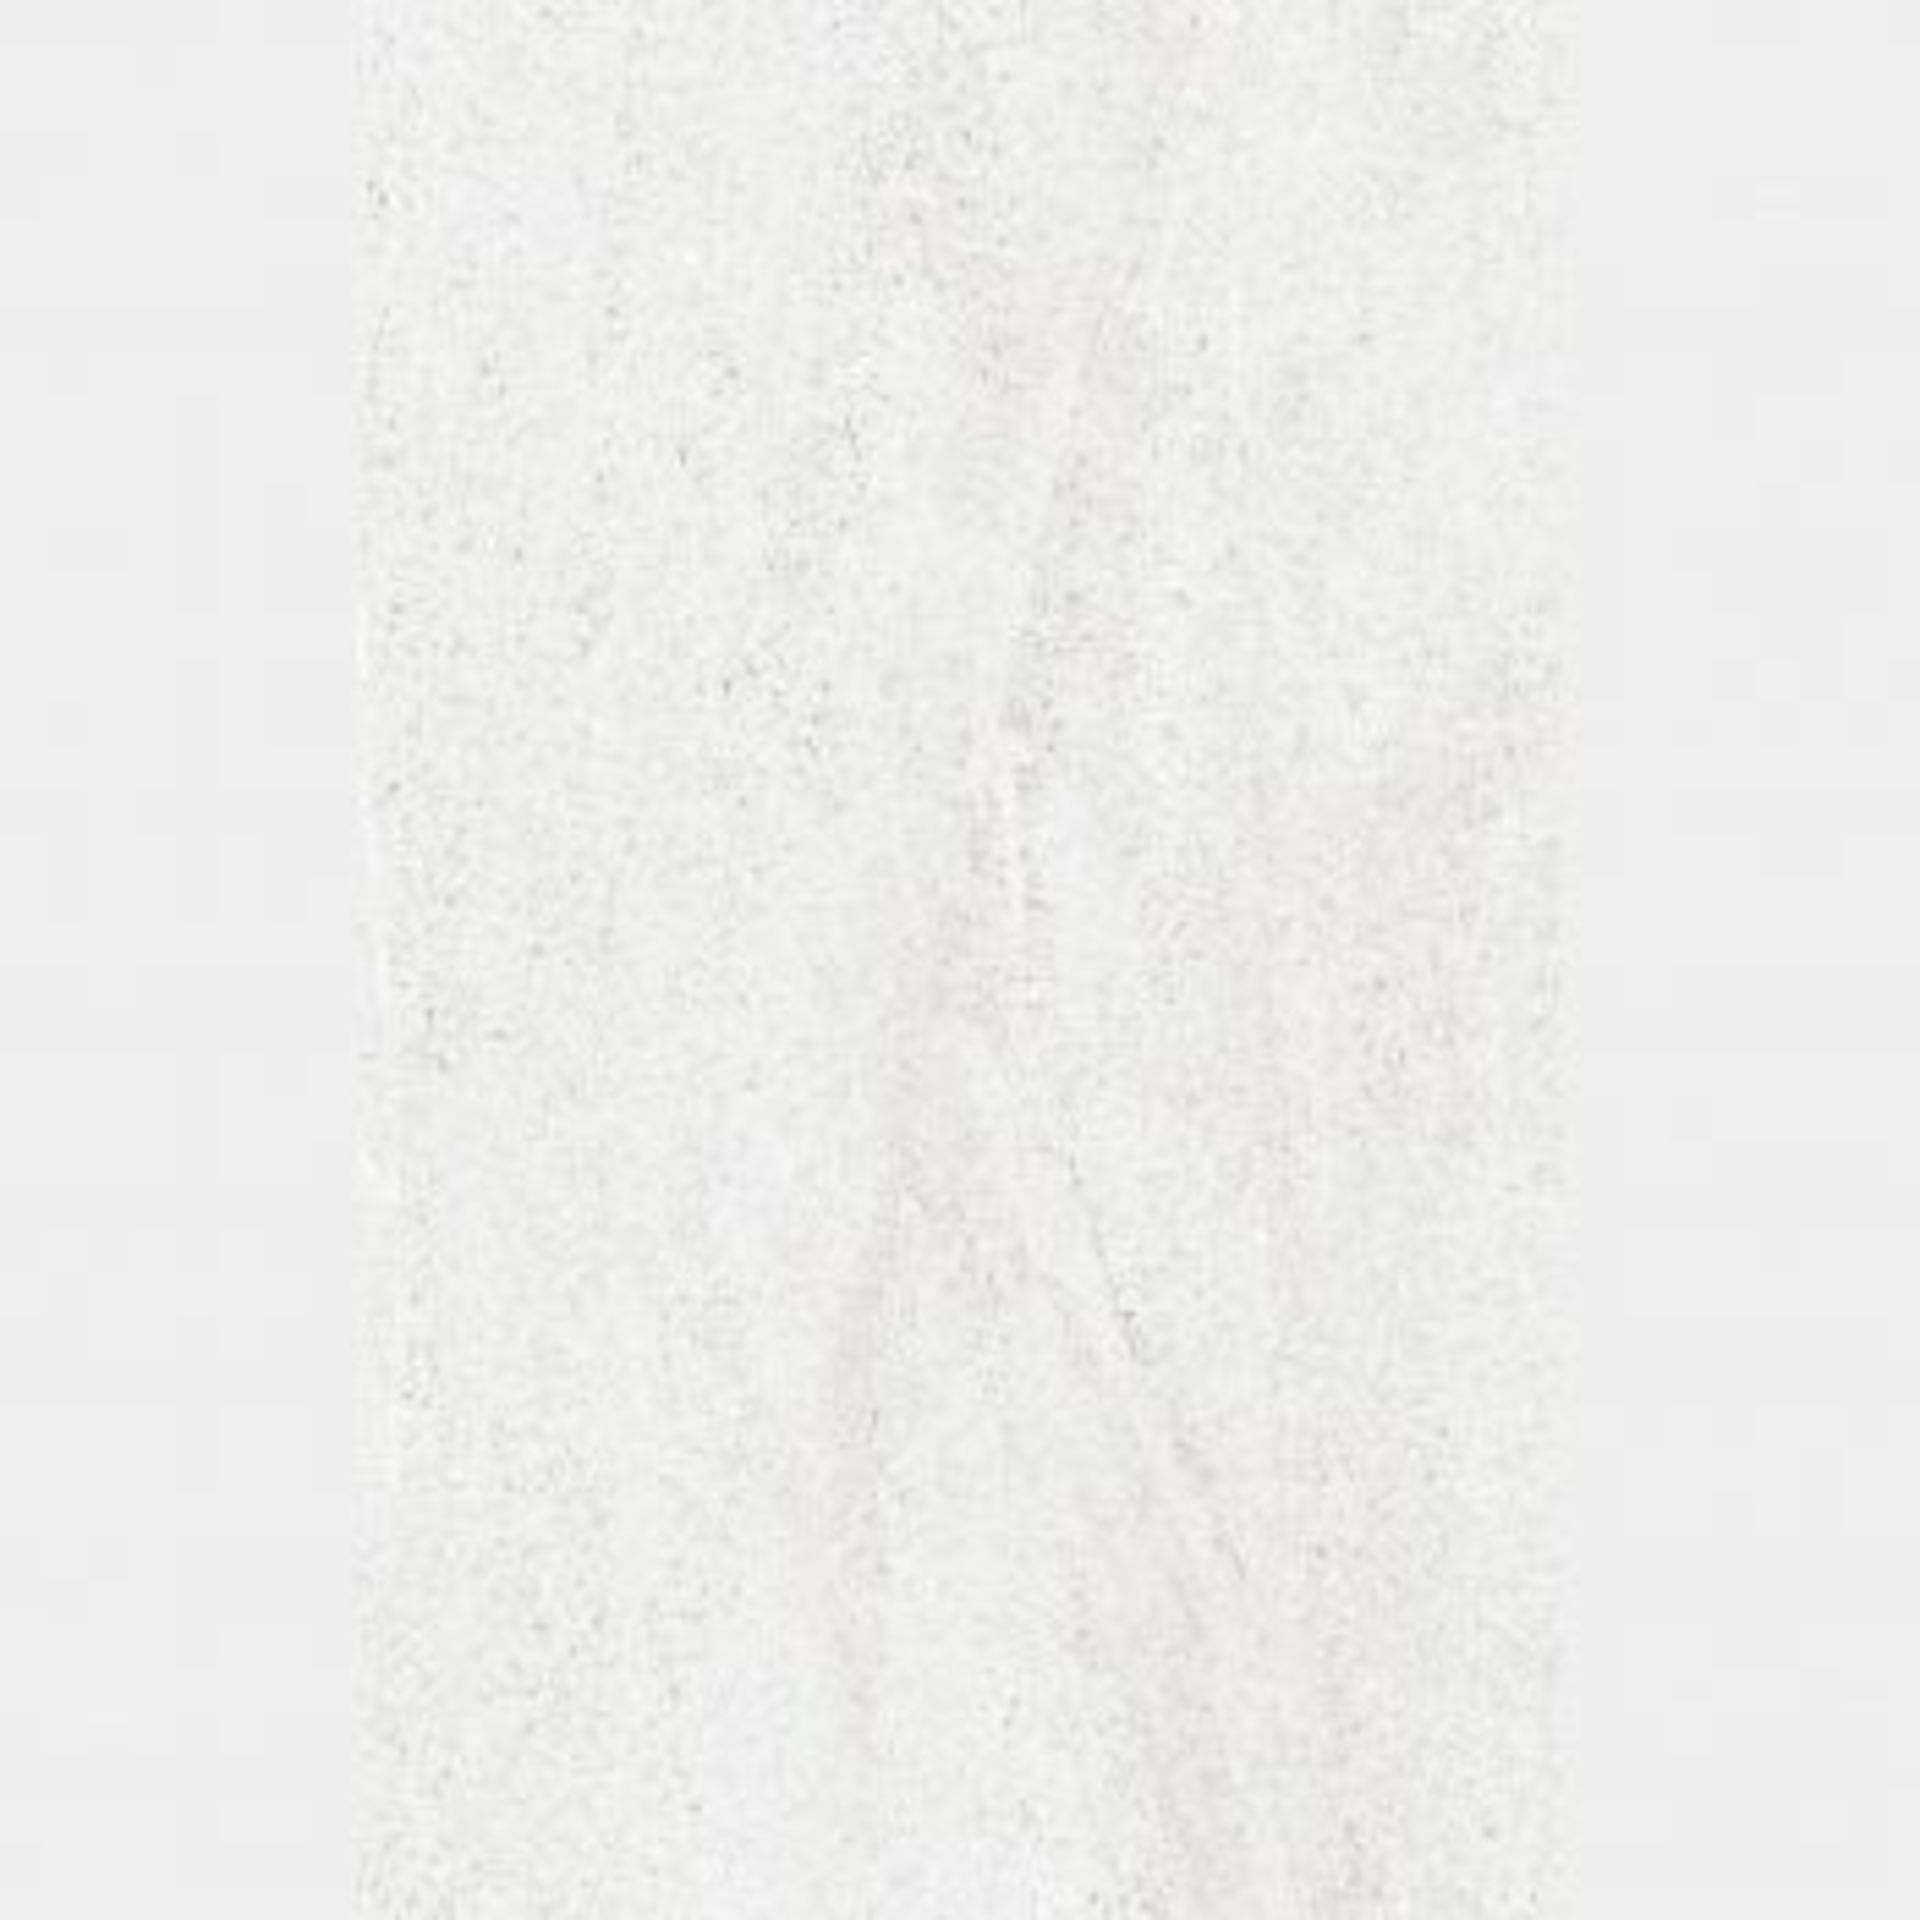 New 5.65m2 Porcelanosa Ixos Blanco Tiles. 200x300mm Per Tile, 1.13m2 Per Pack. - Image 2 of 2